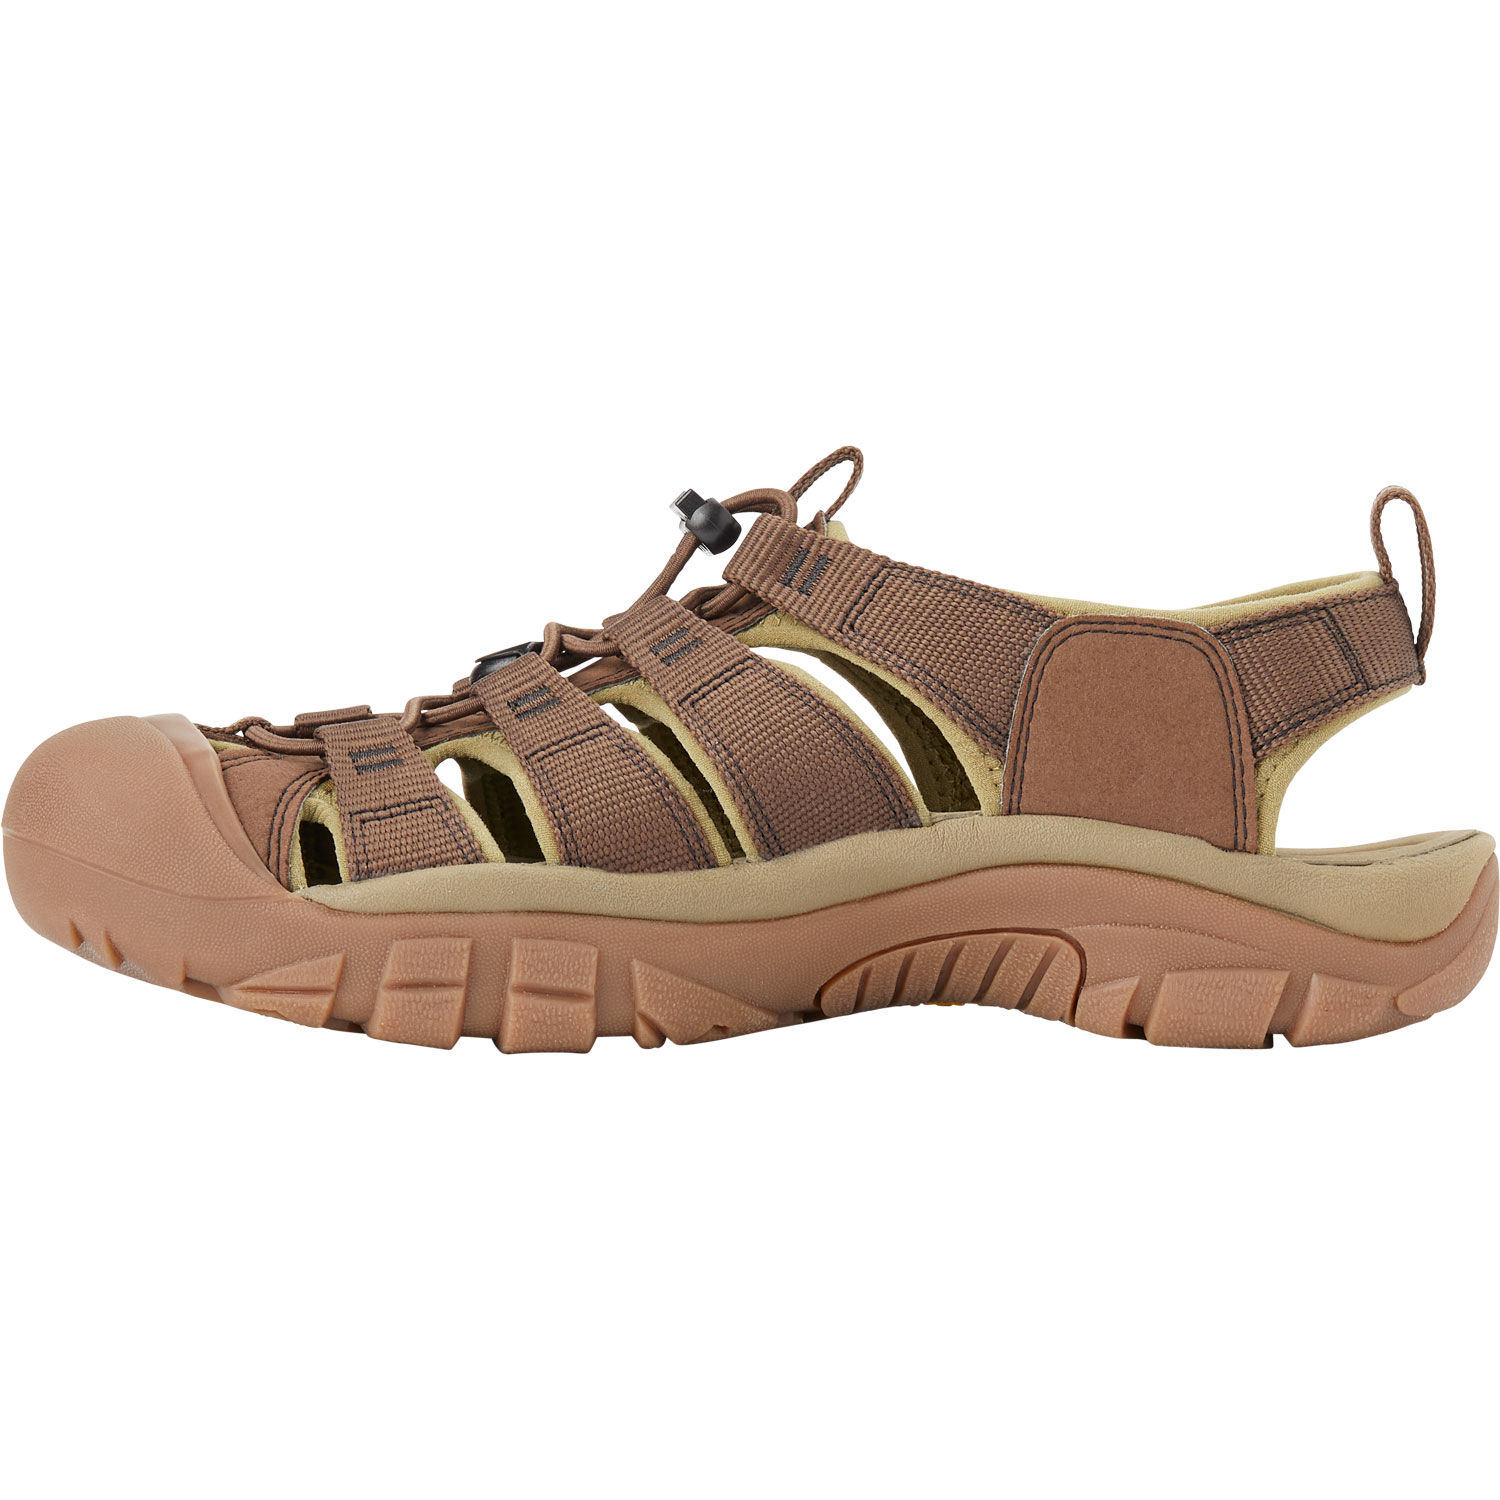 Men's Keen Newport H2 Sandals | Duluth Trading Company